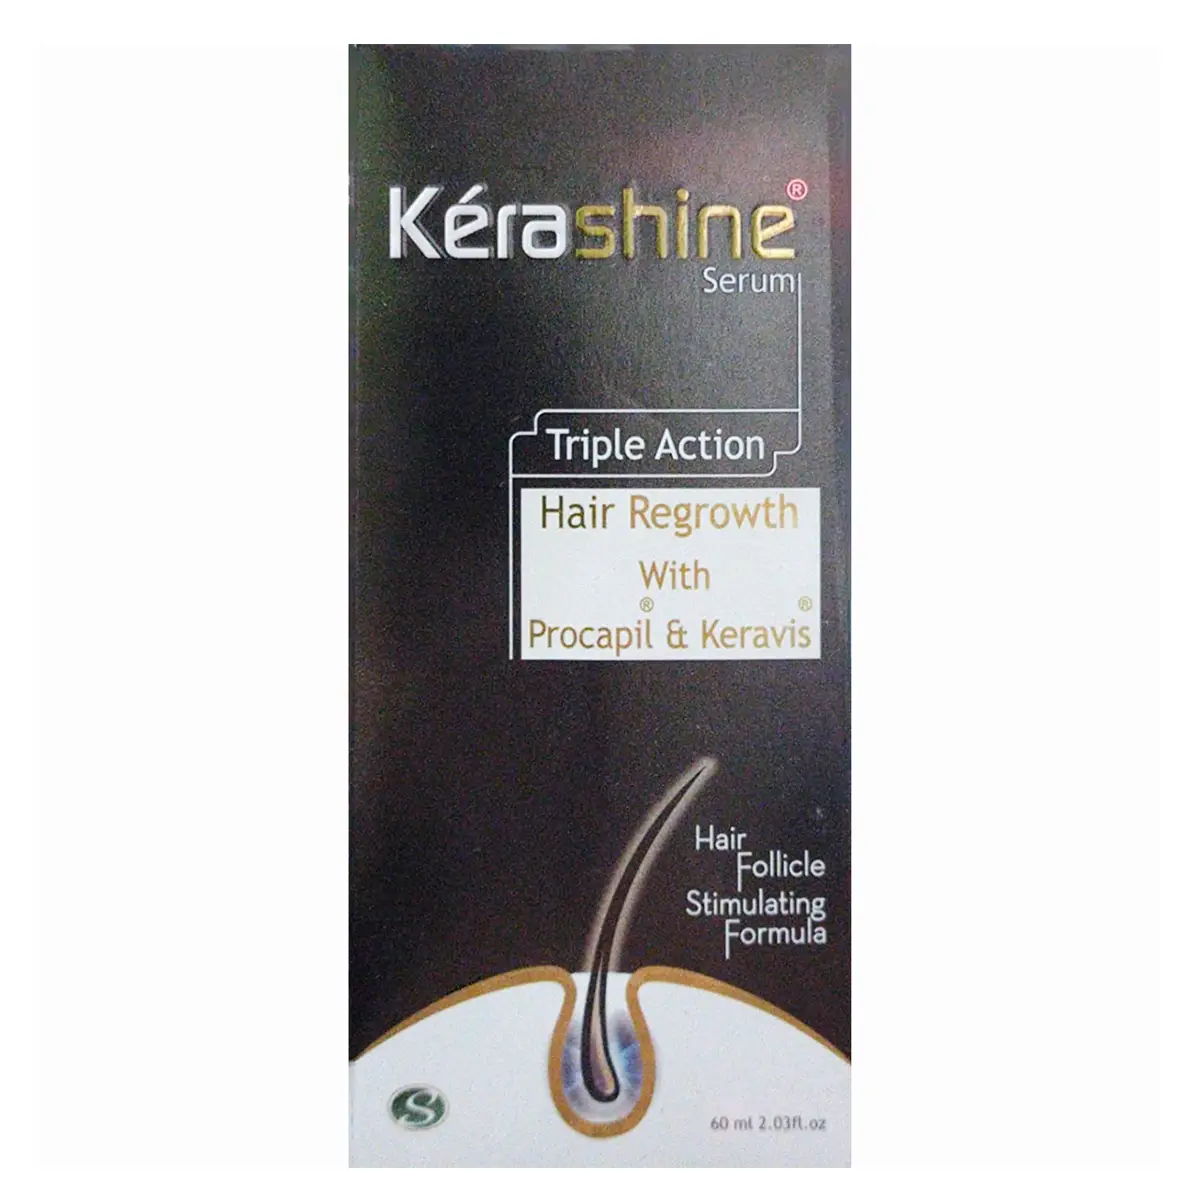 Kerashine Serum | Reduces Hair Loss & Promotes Hair Growth